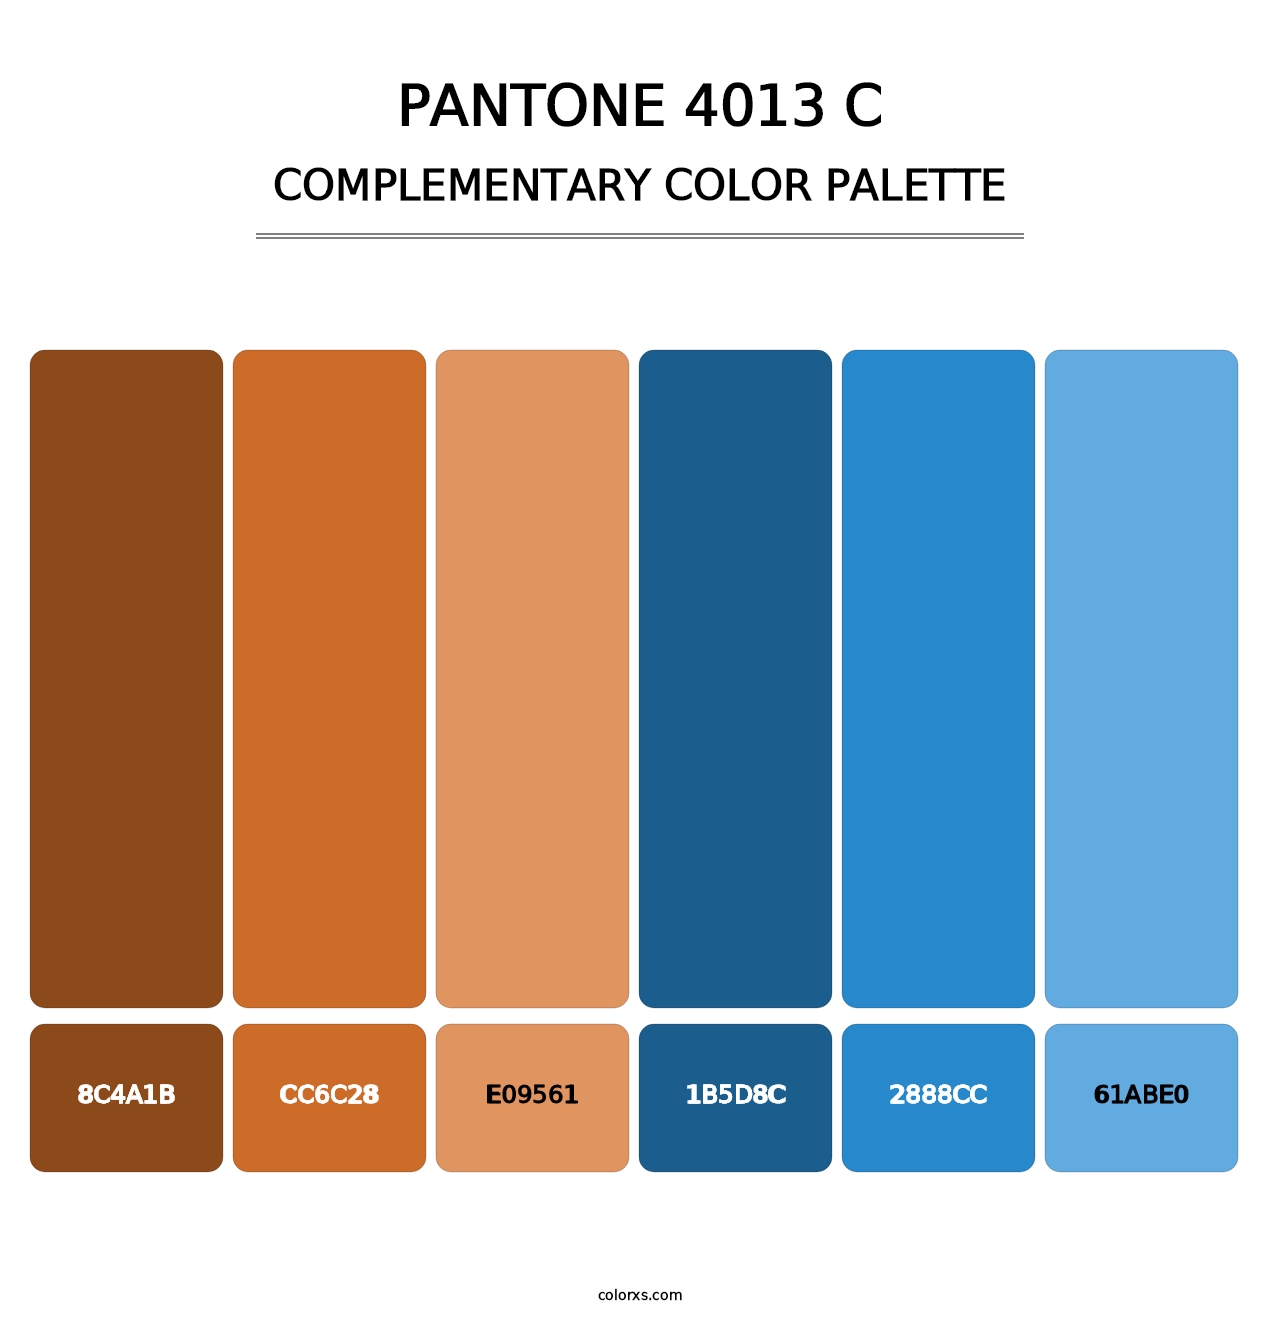 PANTONE 4013 C - Complementary Color Palette